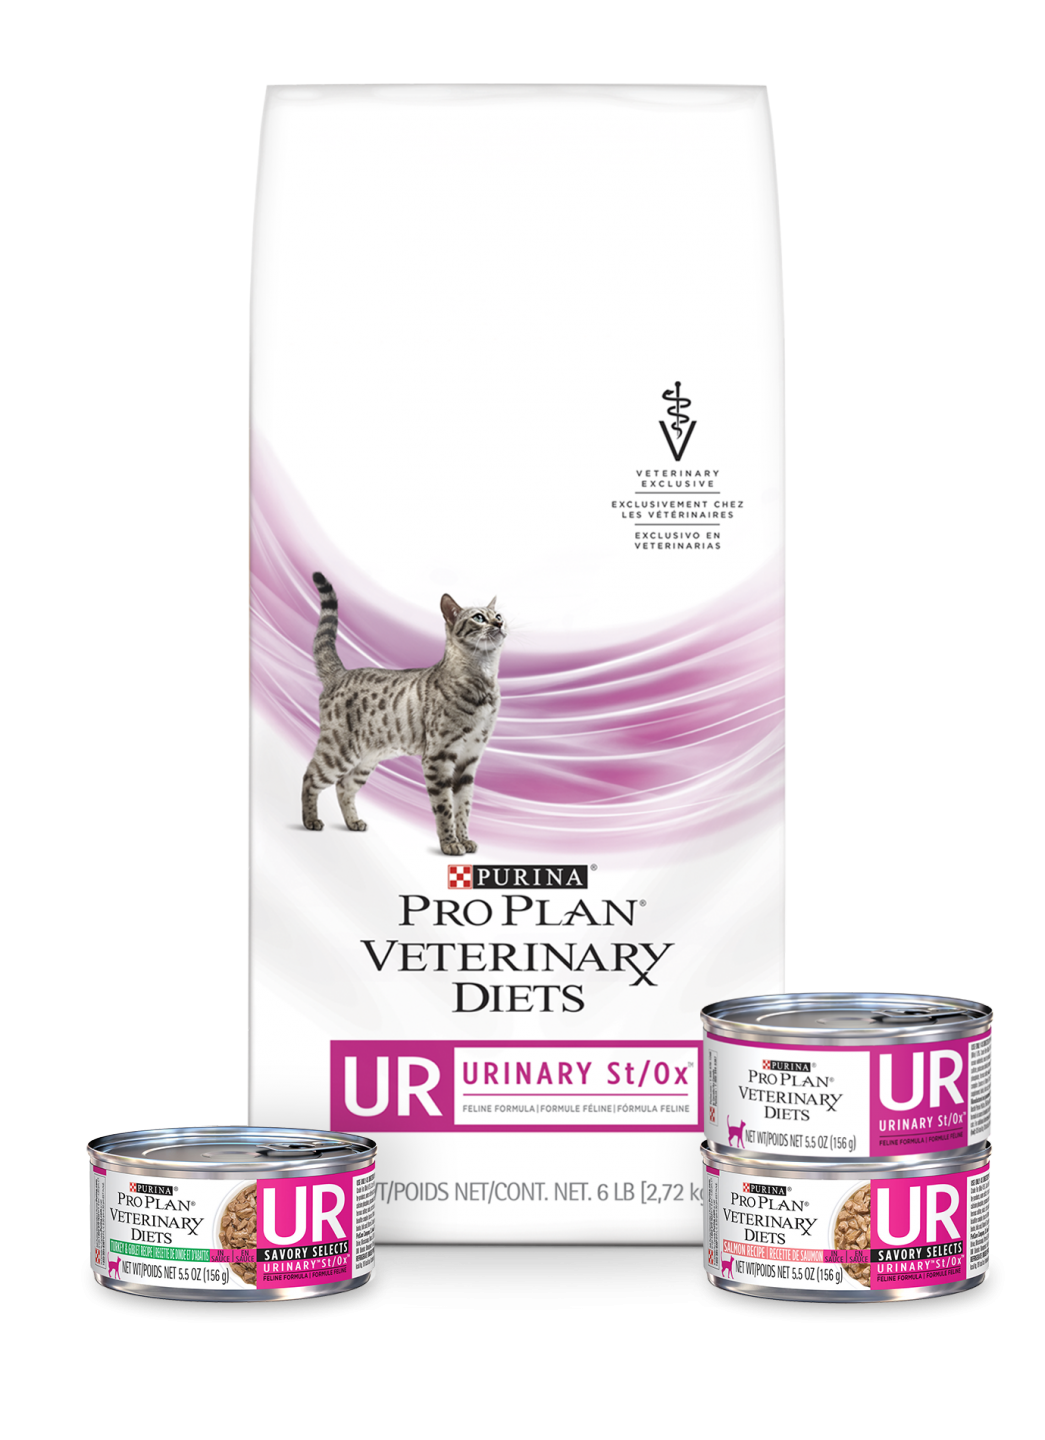 Purina Pro Plan Veterinary Diets ur Urinary. Purina Pro Plan Veterinary Diets Urinary для кошек. Про план Уринари жидкий клрм. Пурина Проплан Уринари паштет. Pro plan аналог